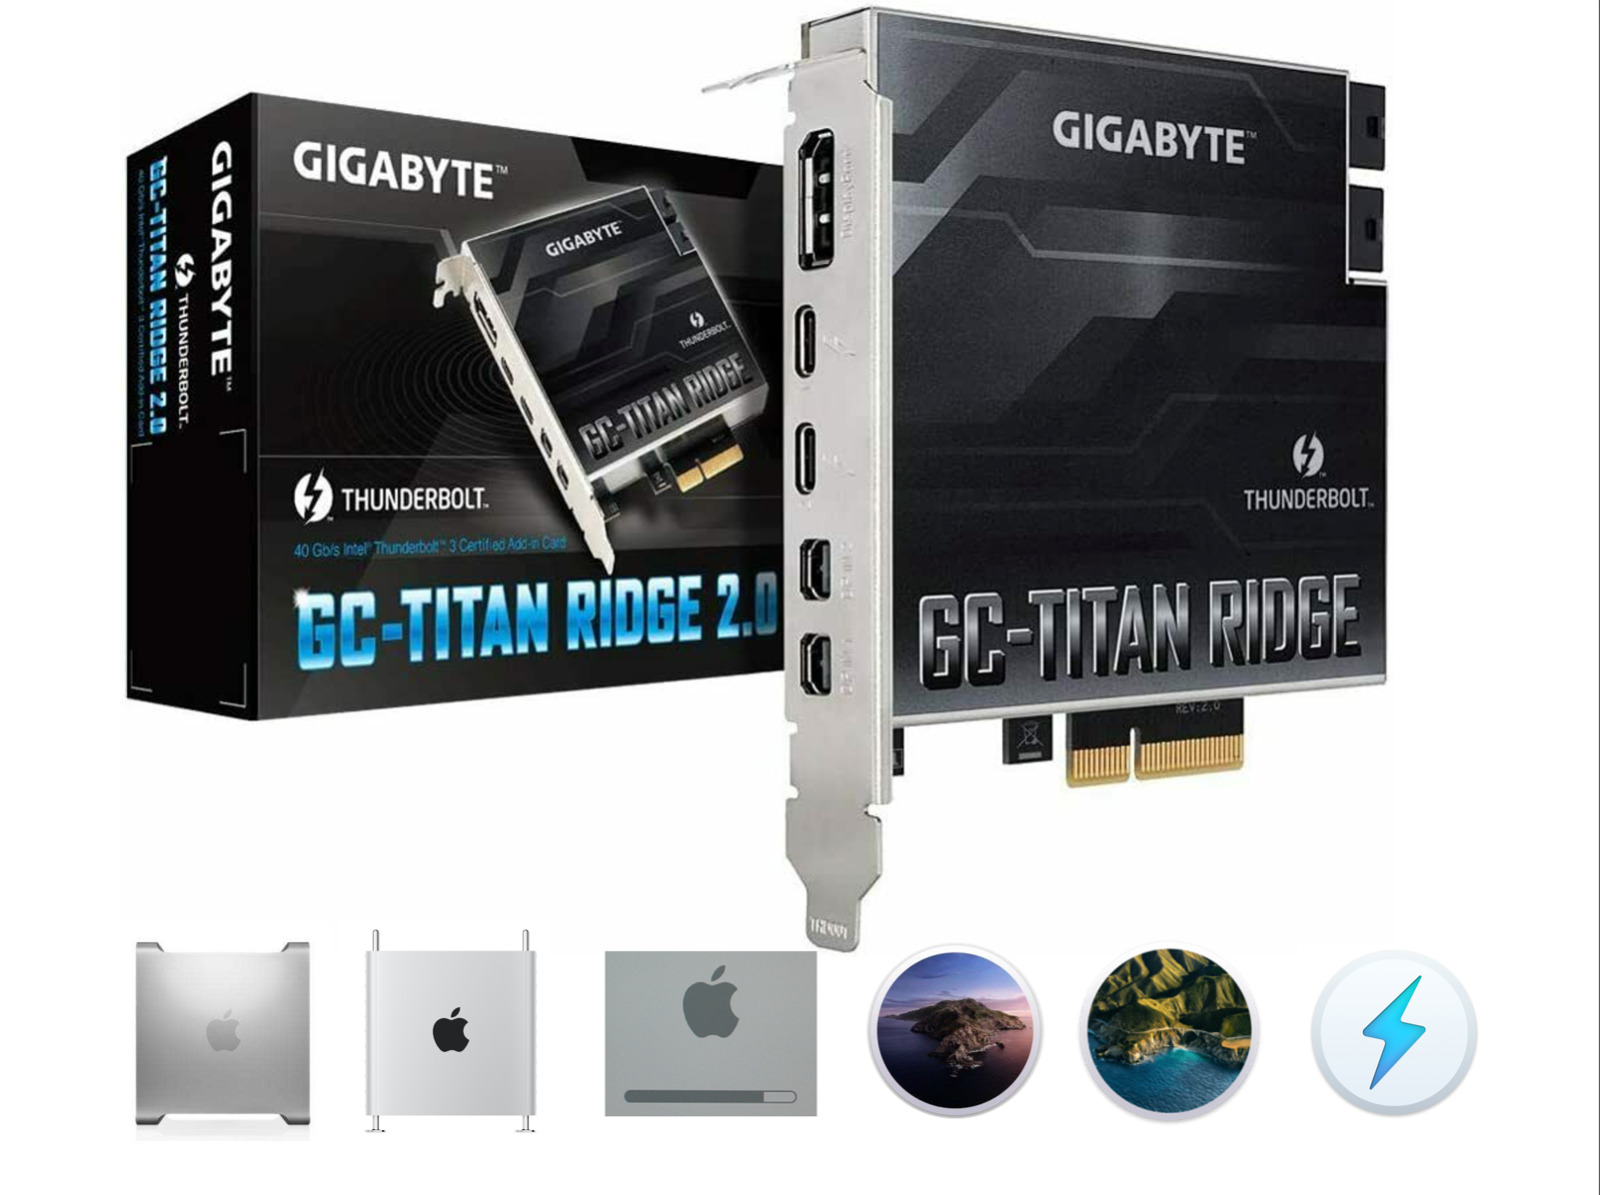 Mac Pro 4,1 5,1 Flashed Gigabyte Titan Ridge 2.0 Thunderbolt 3 Card No Box